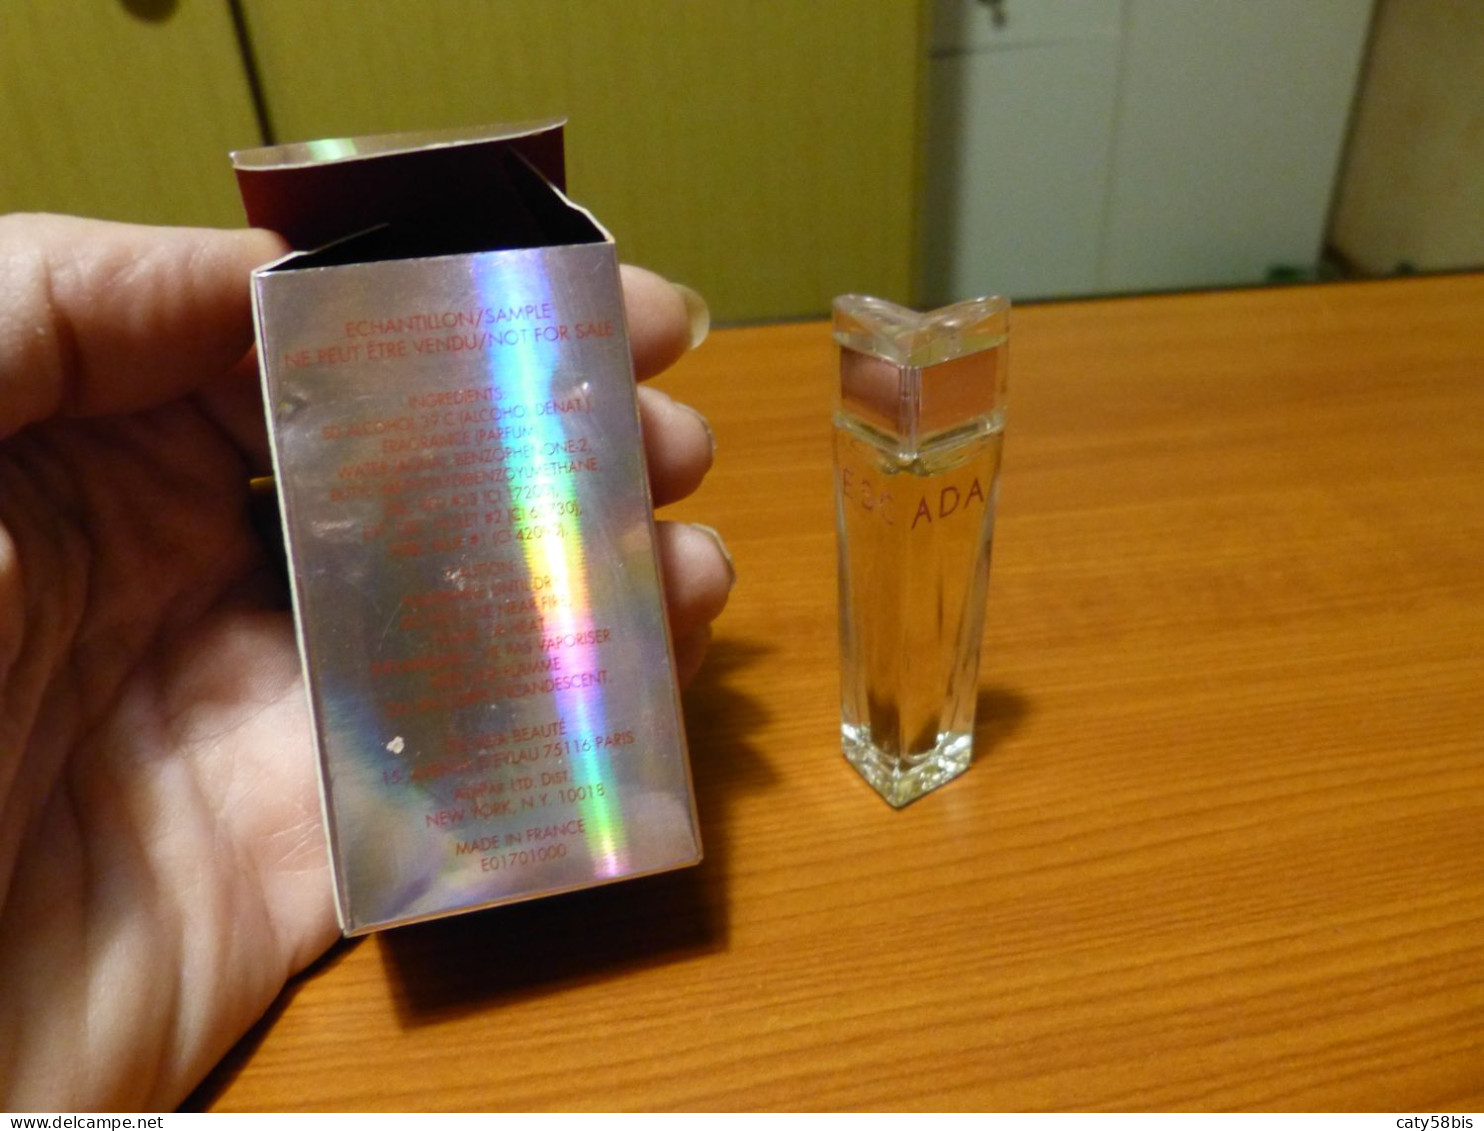 Miniature Parfum Avec Boite Escada - Miniaturen Damendüfte (mit Verpackung)